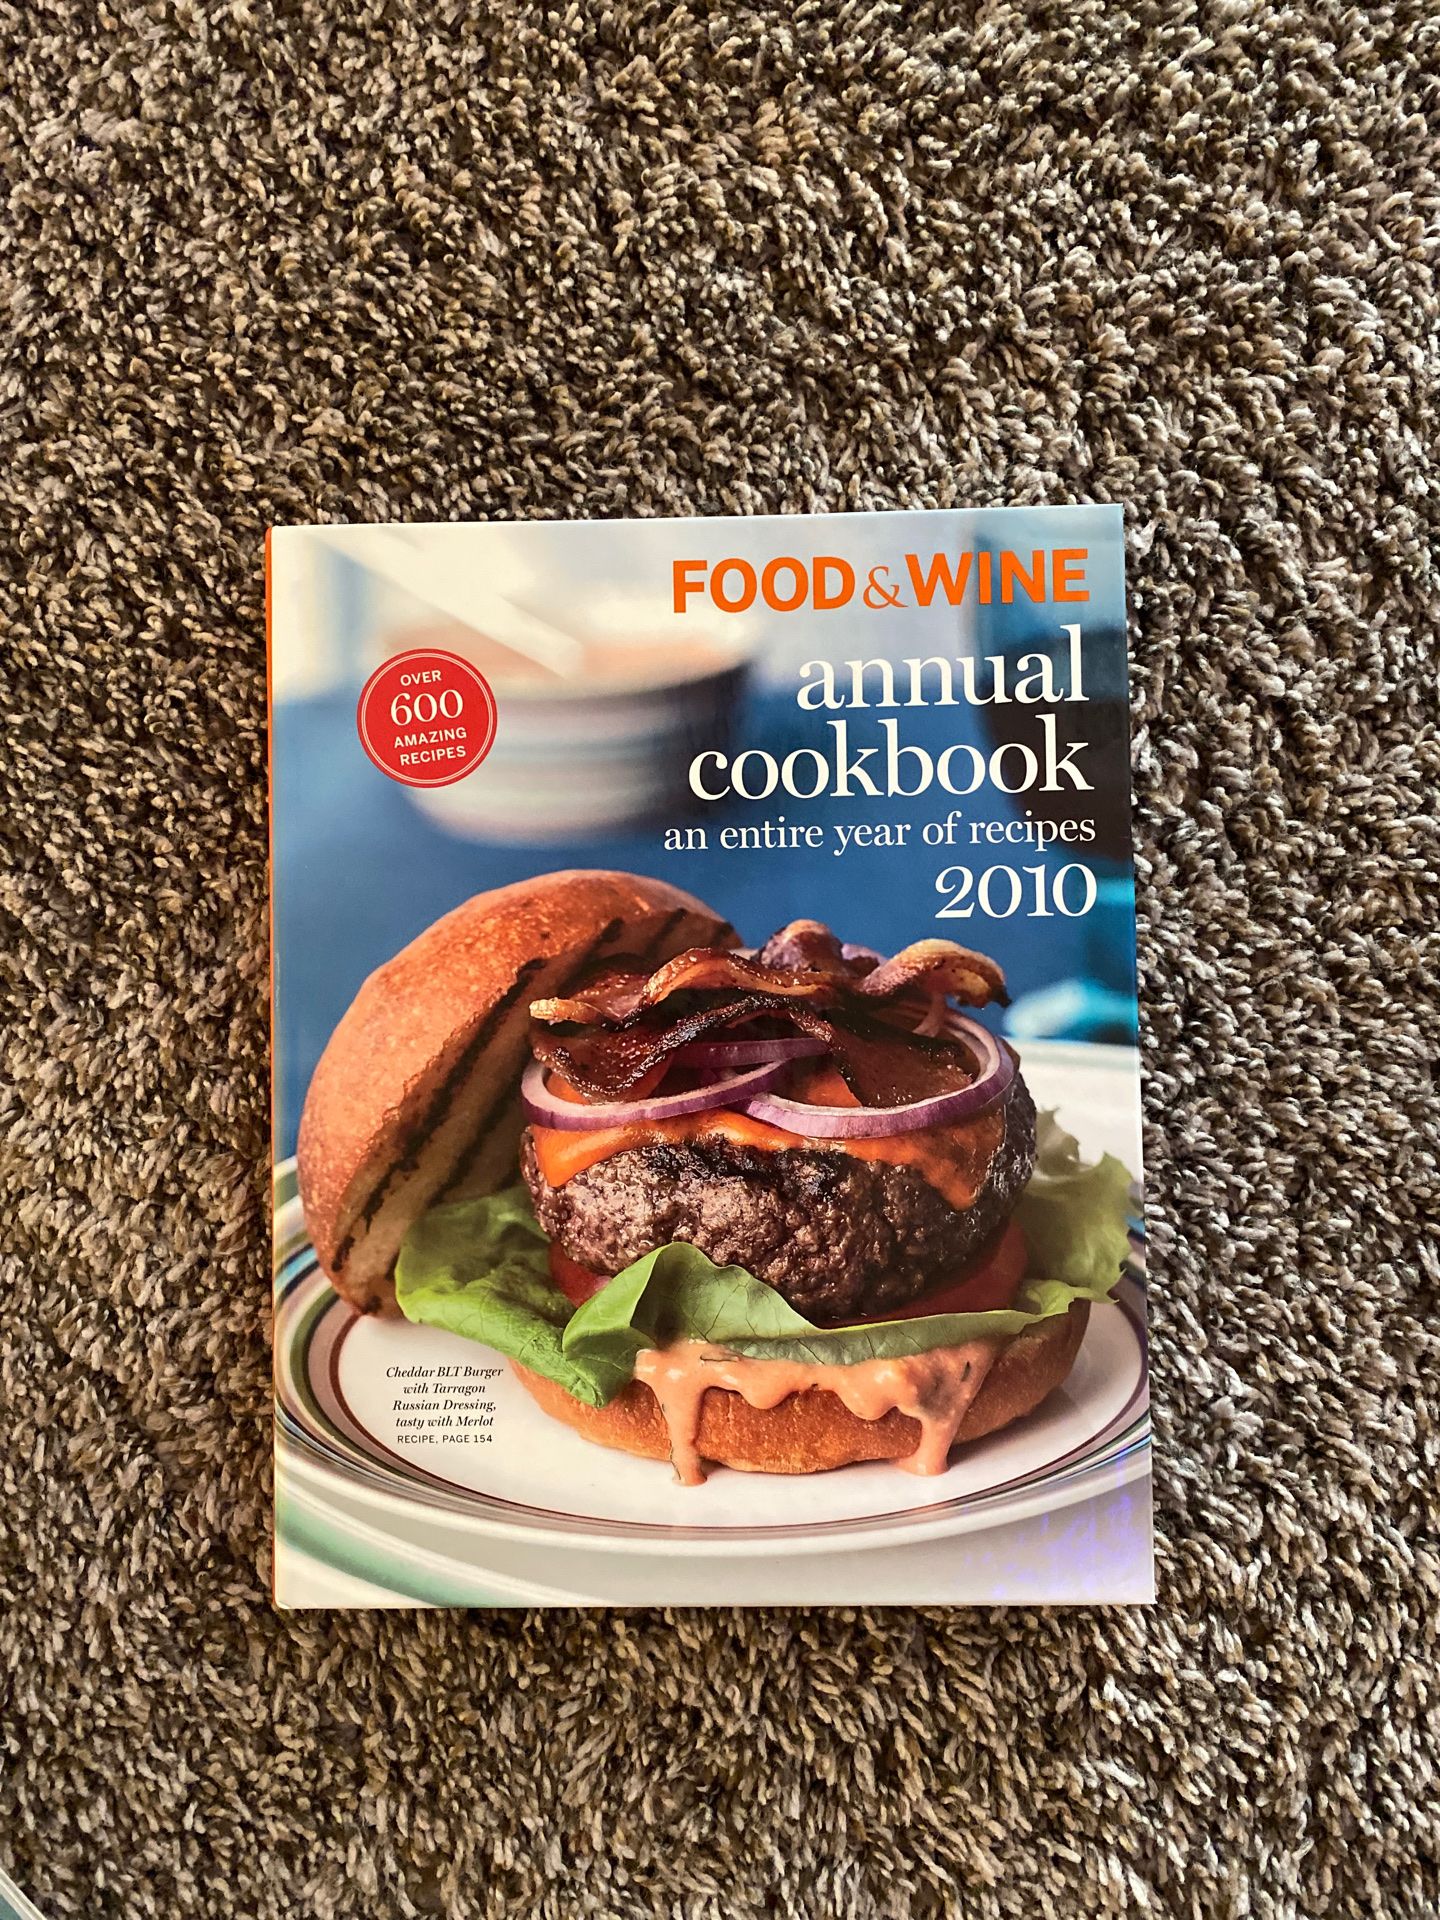 Food and wine cookbook